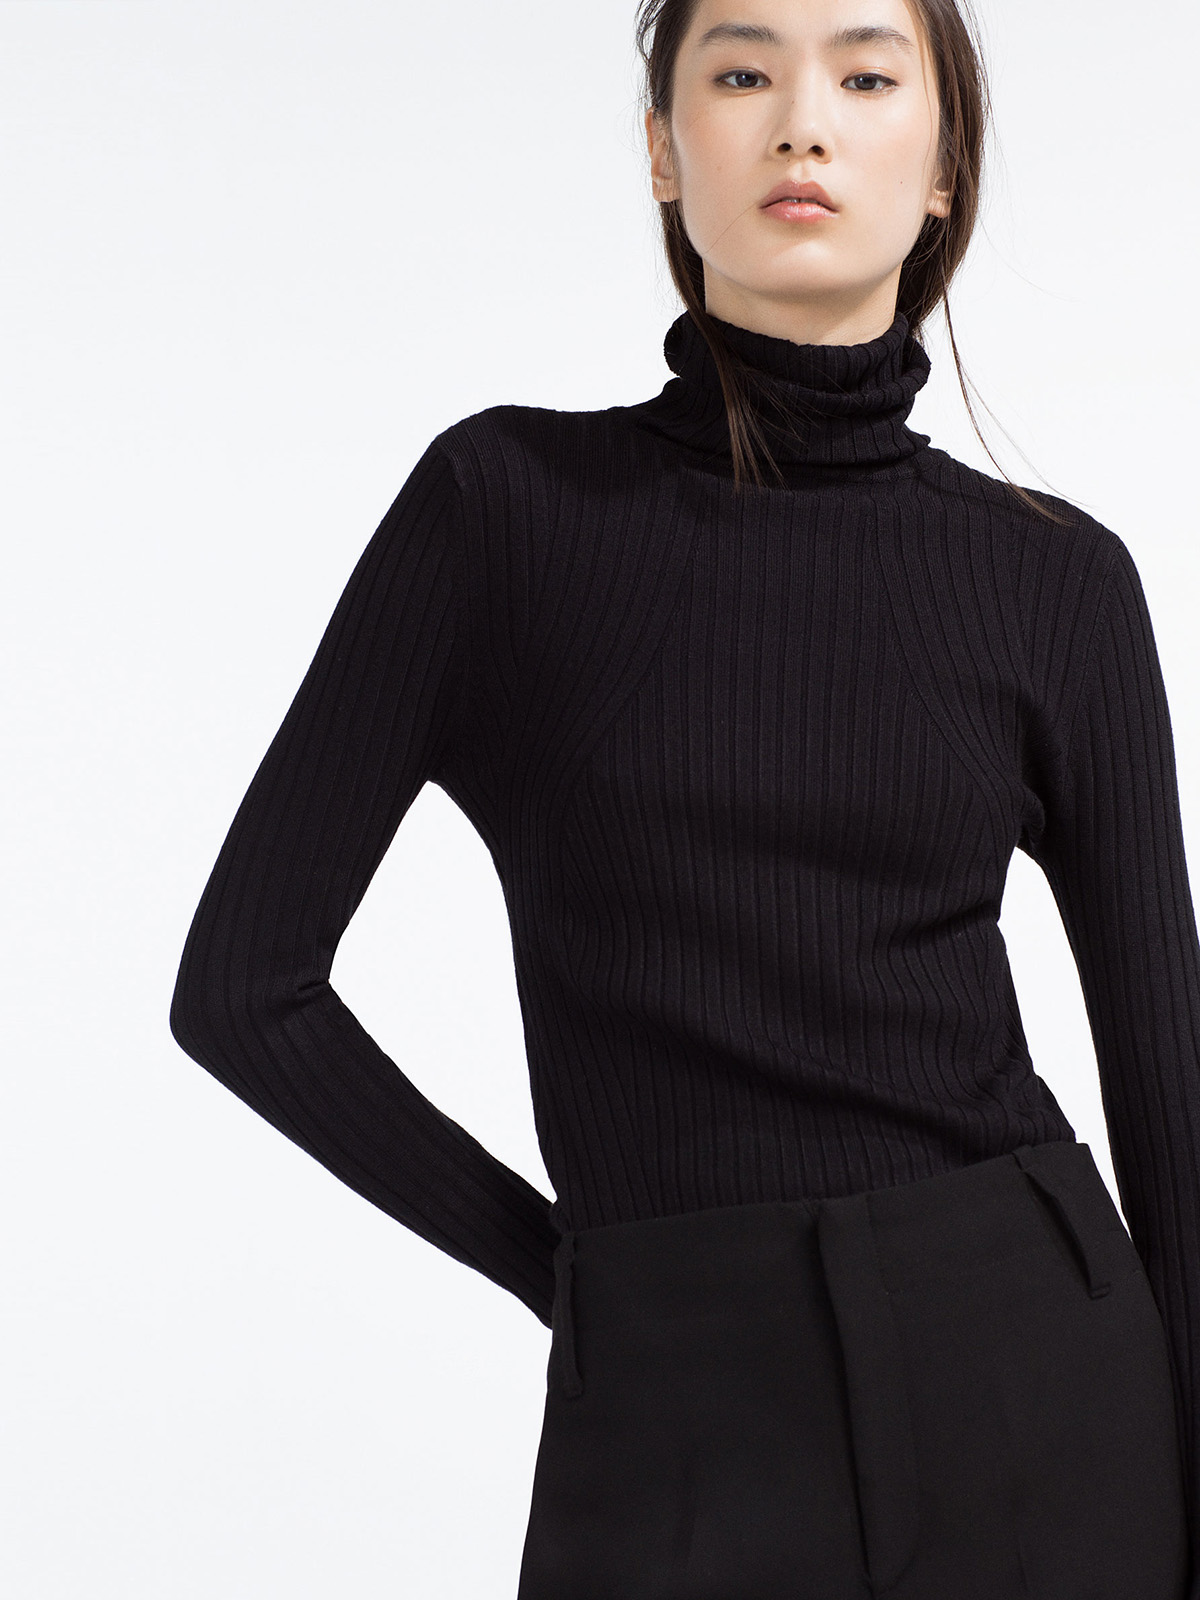 Пуловер Zara женский черный